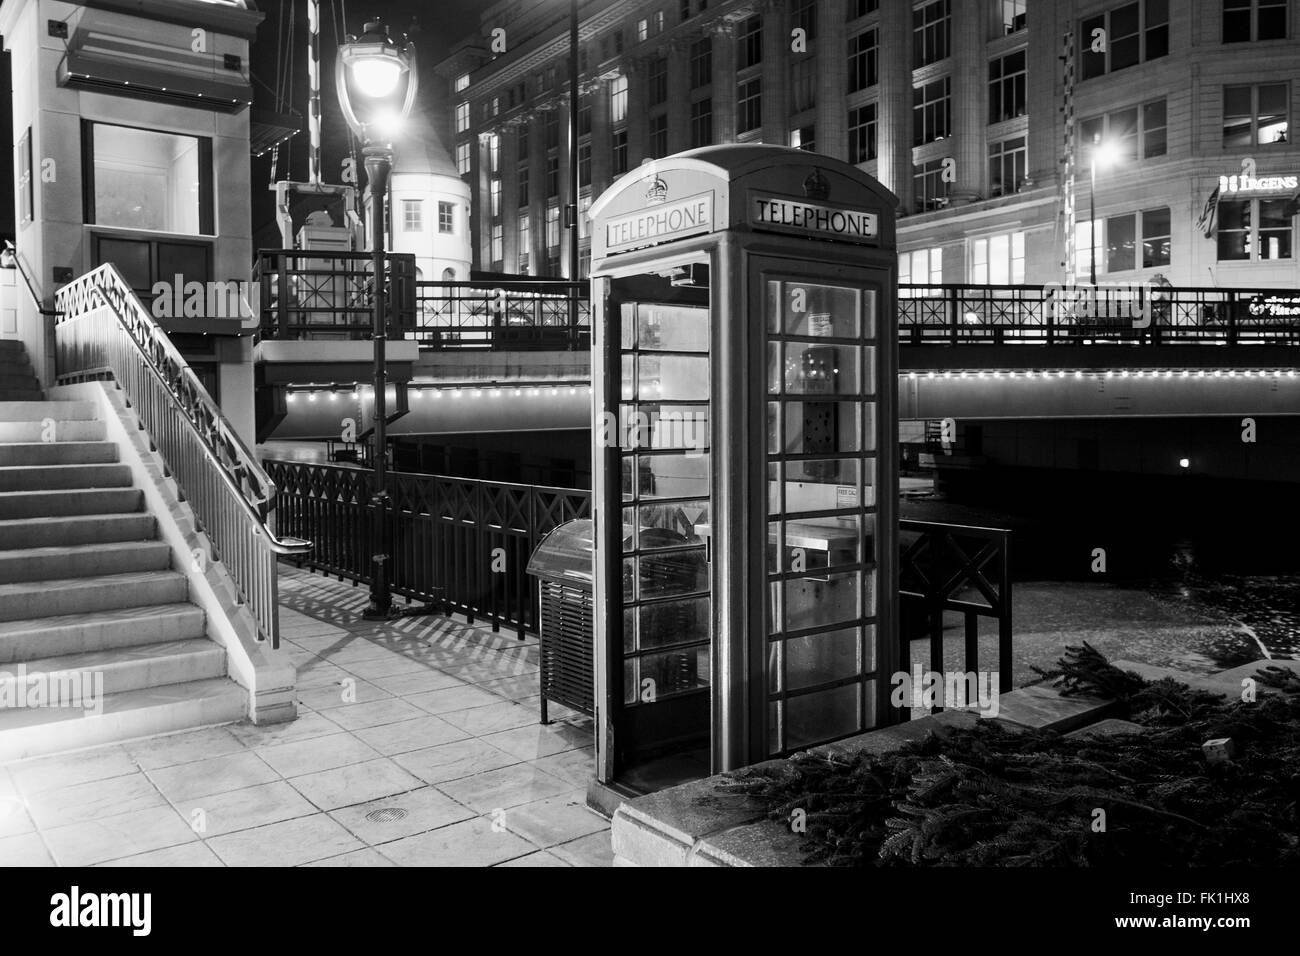 Londra cabina telefonica notte in bianco nero Foto Stock